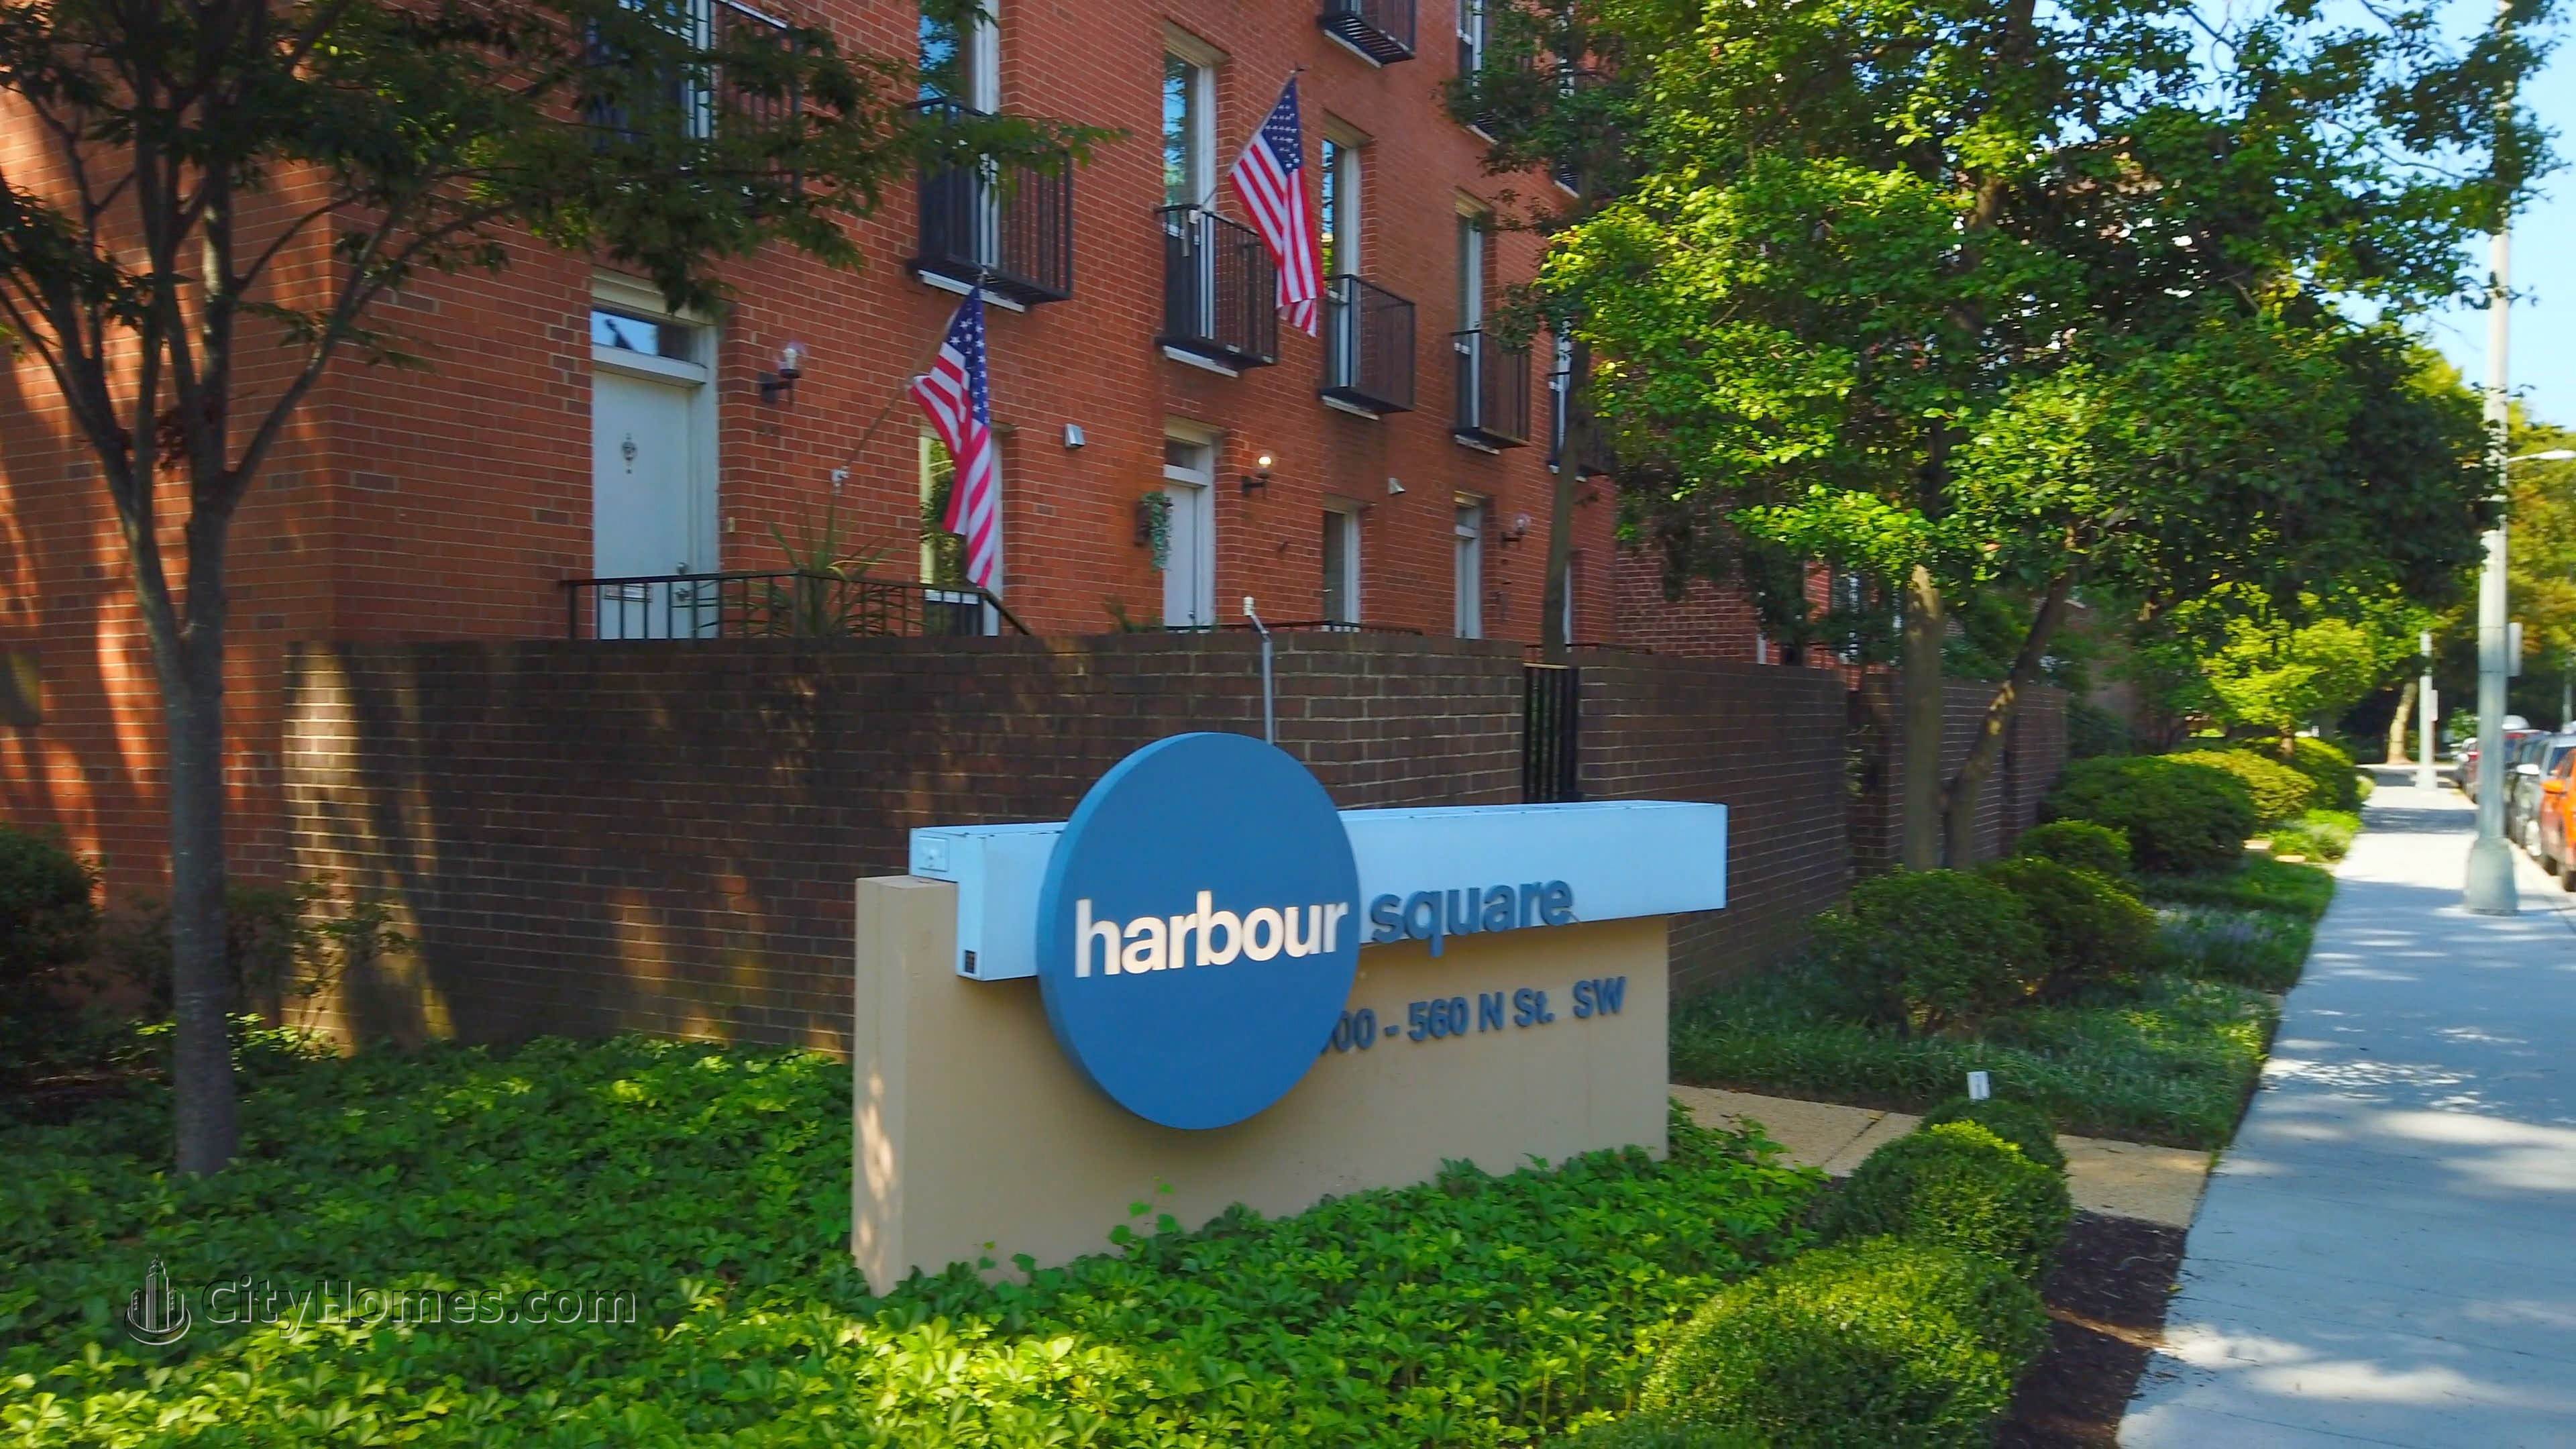 4. Harbour Square建于 400 - 560 N St SW, Southwest / Waterfront, 华盛顿市, DC 20024